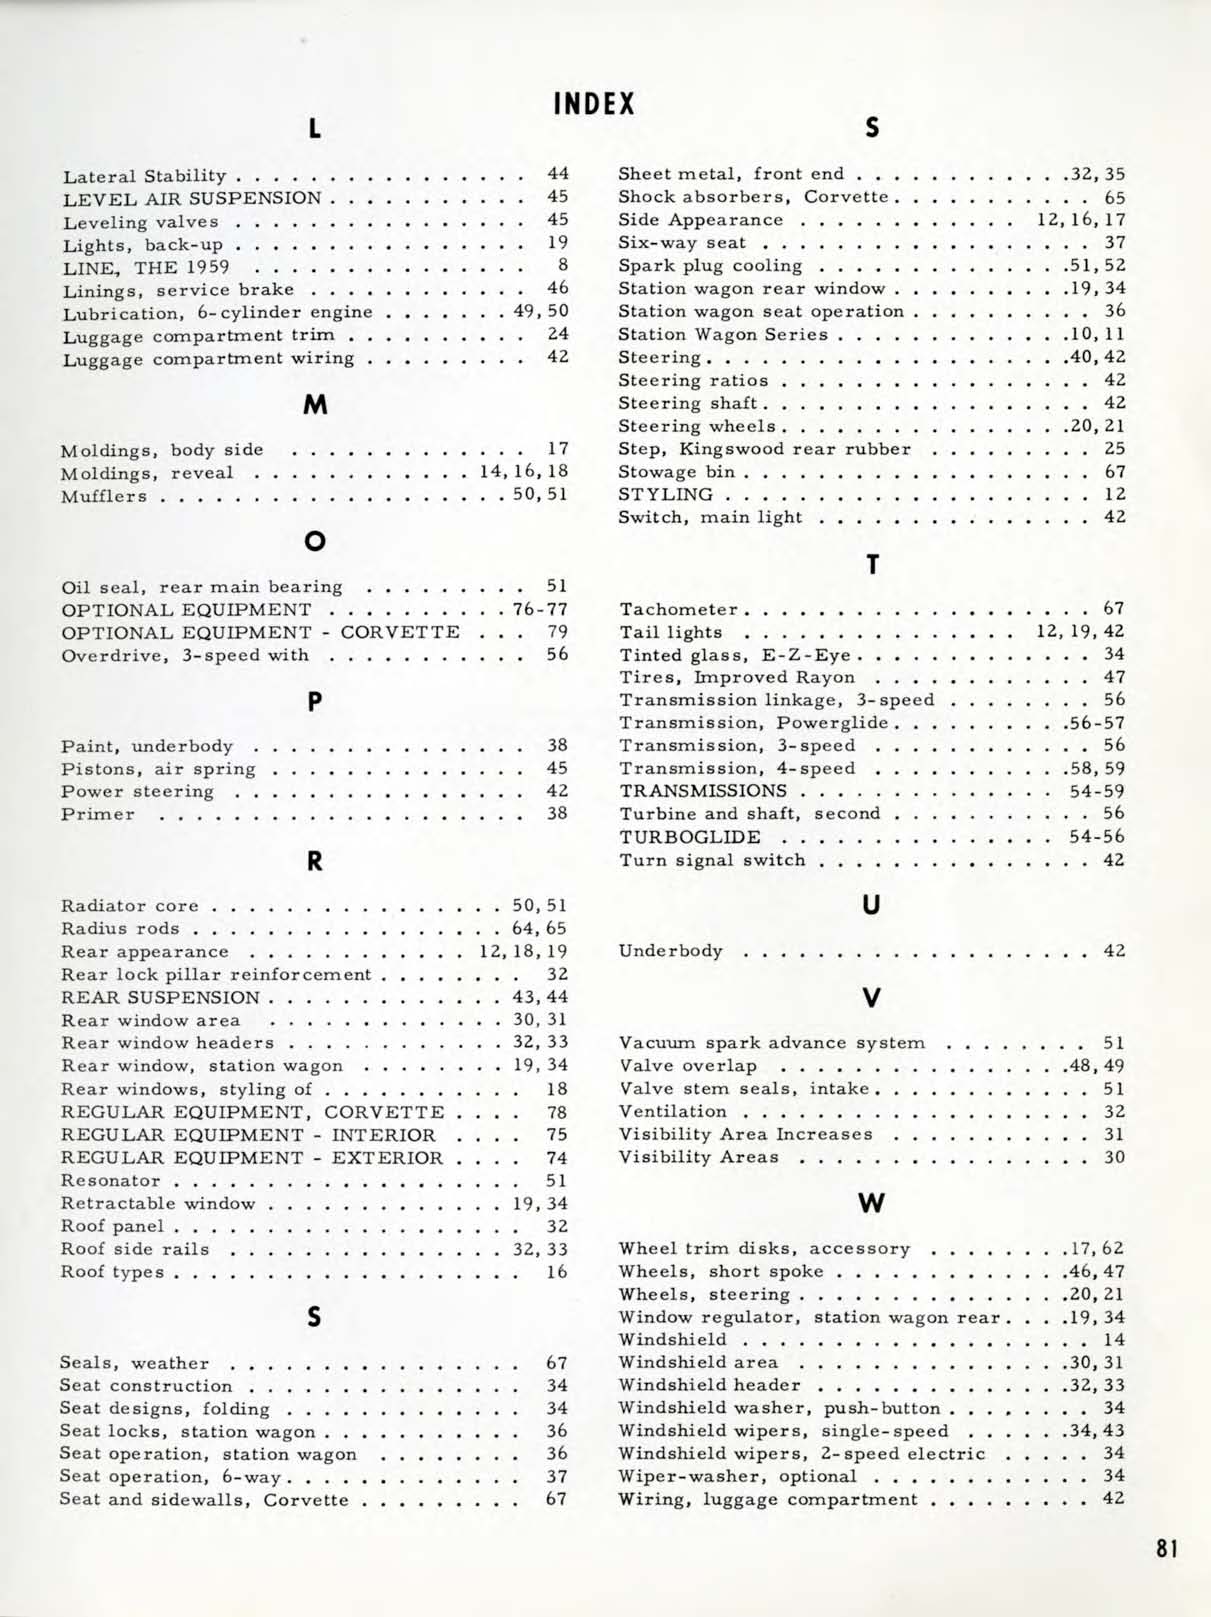 1959_Chevrolet_Engineering_Features-81